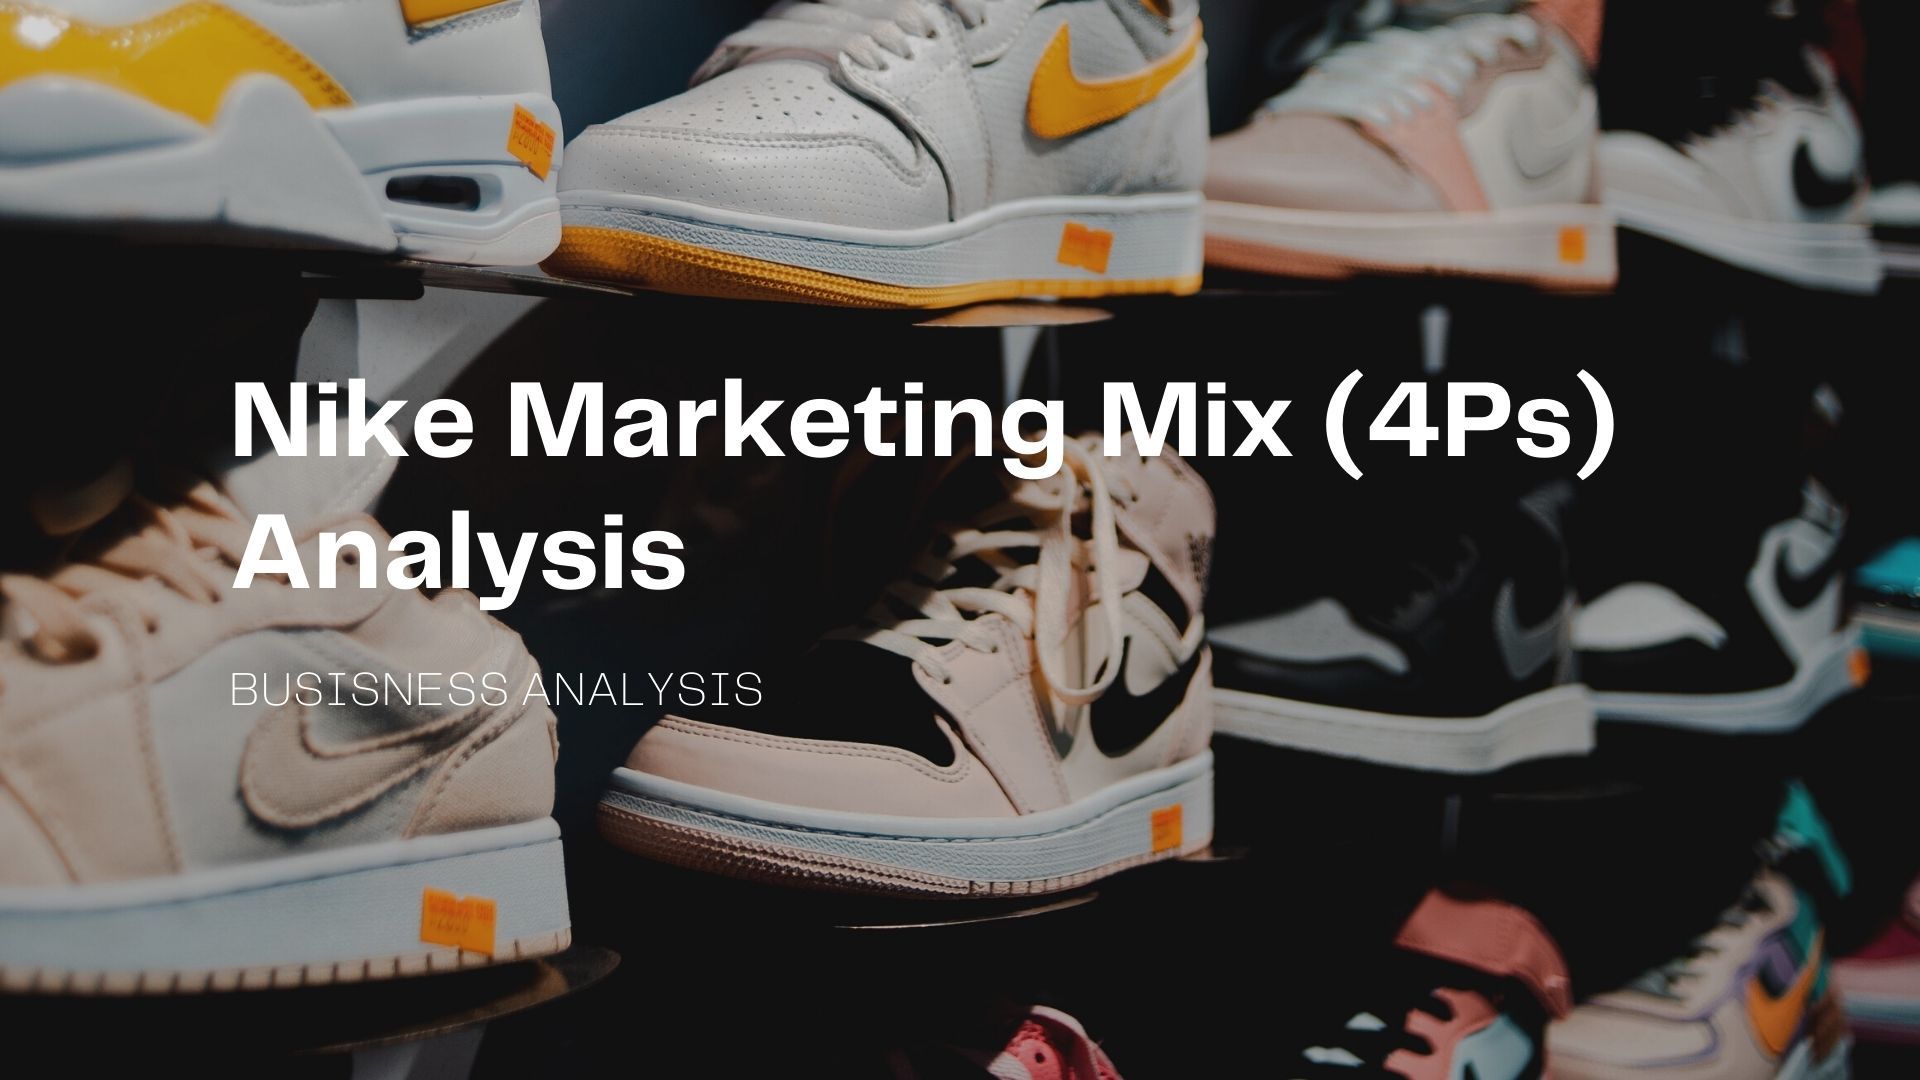 Nike Marketing Mix (4Ps) Analysis (1).jpg